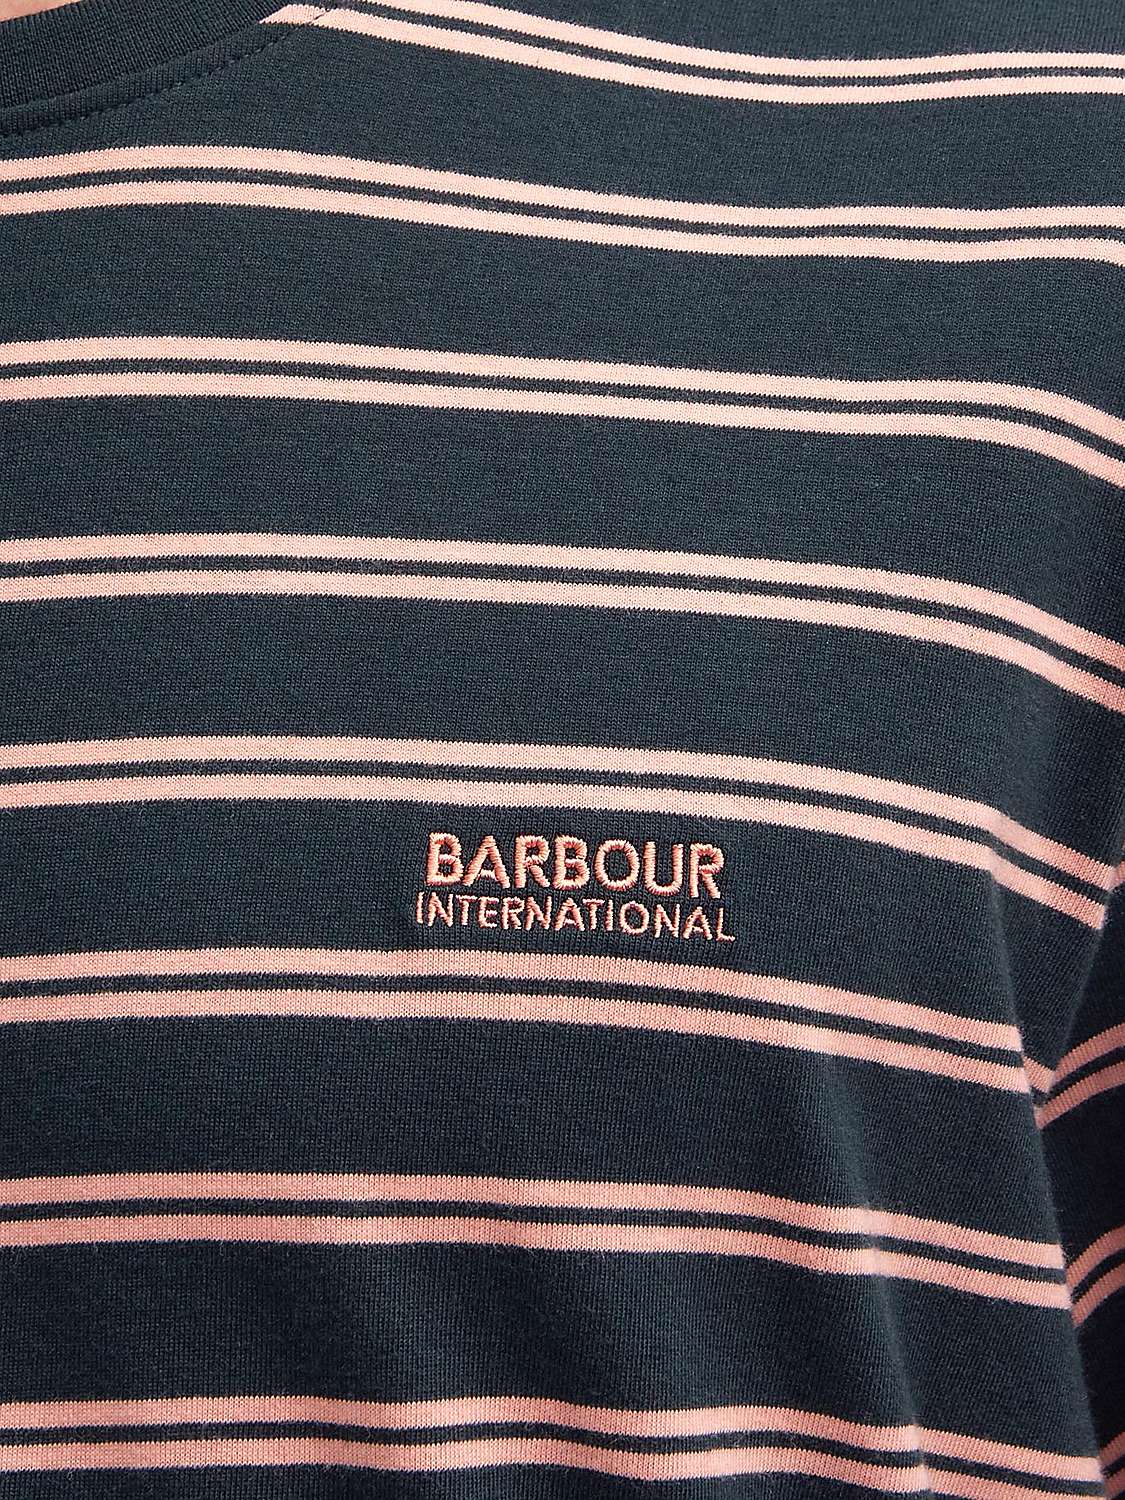 Buy Barbour International Bernie Stripe T-Shirt, Forest River Online at johnlewis.com